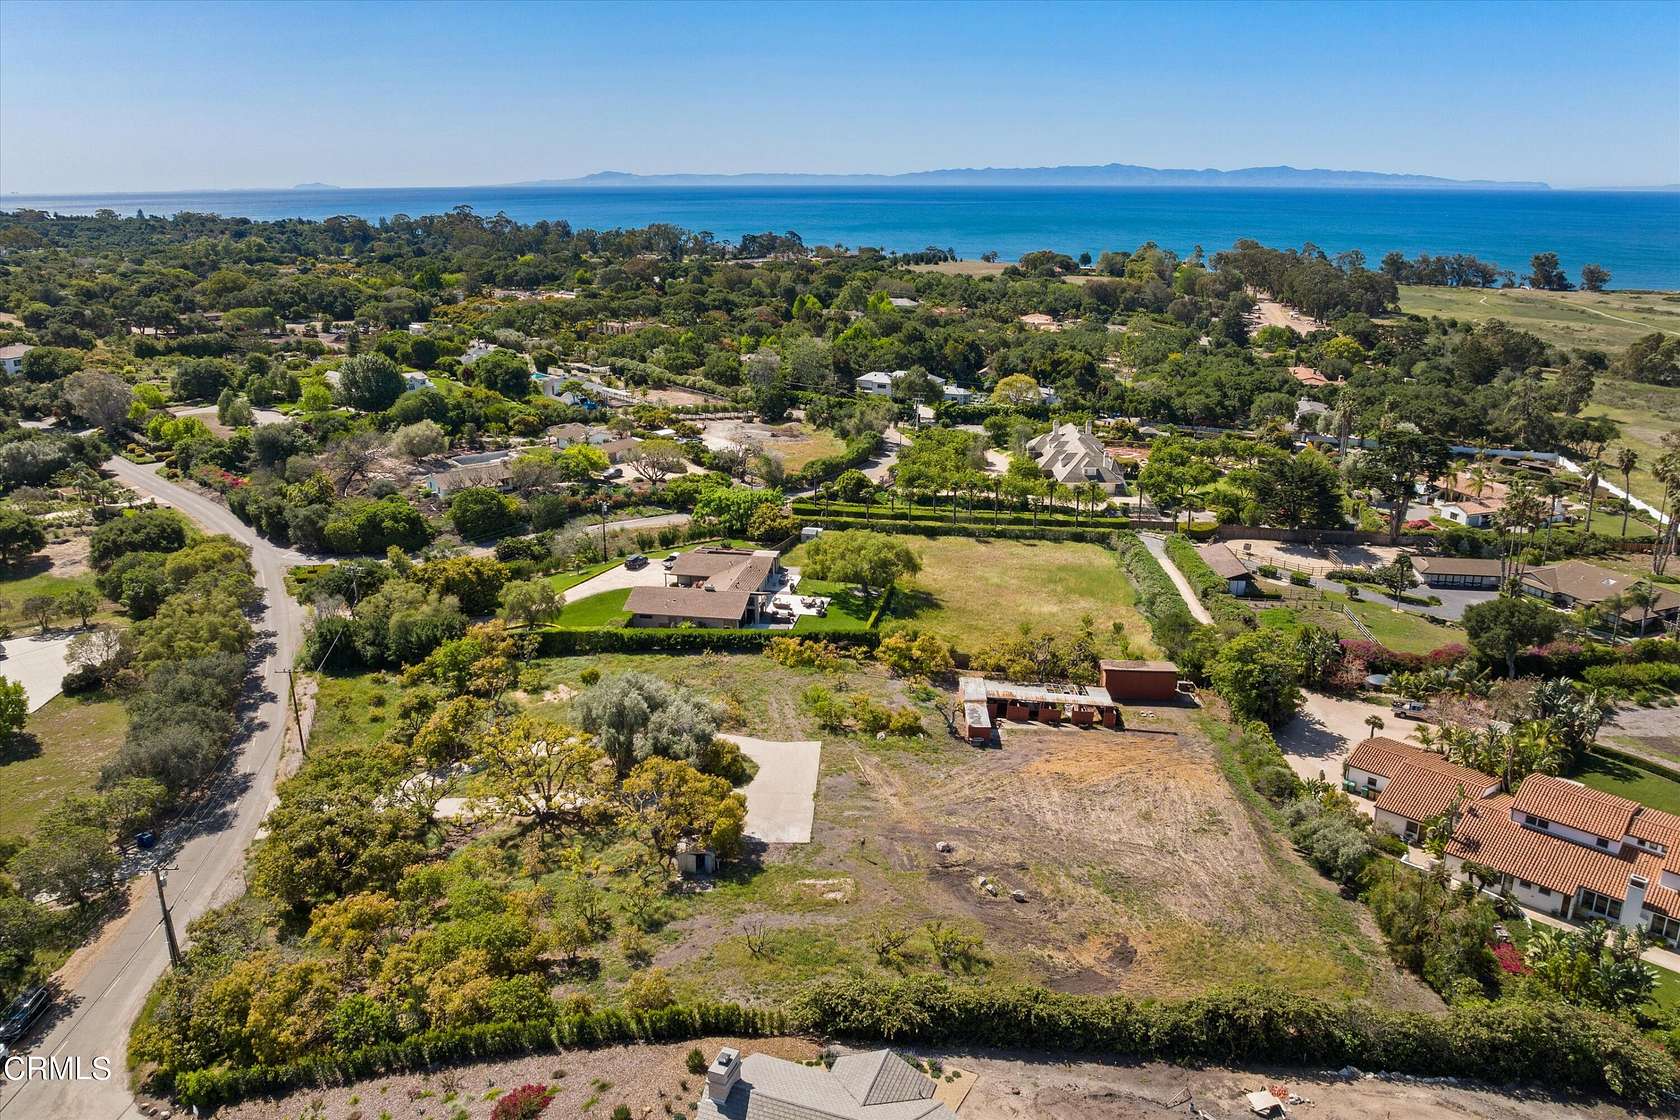 2 Acres of Residential Land for Sale in Santa Barbara, California